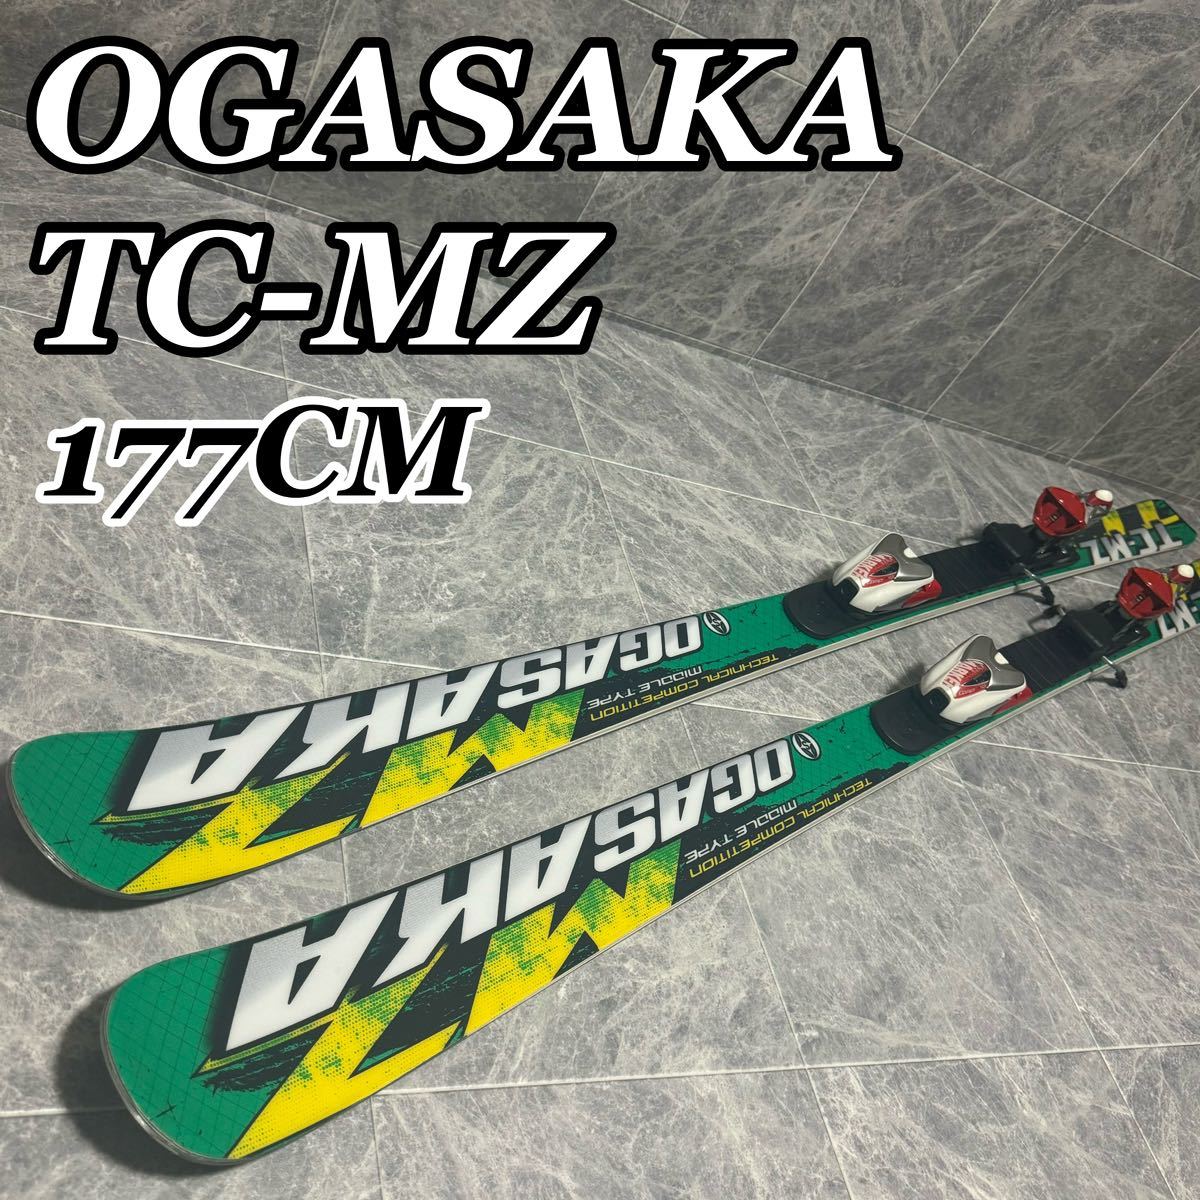 OGASAKA オガサカ TC-MZ 177cm ビンディング スキー